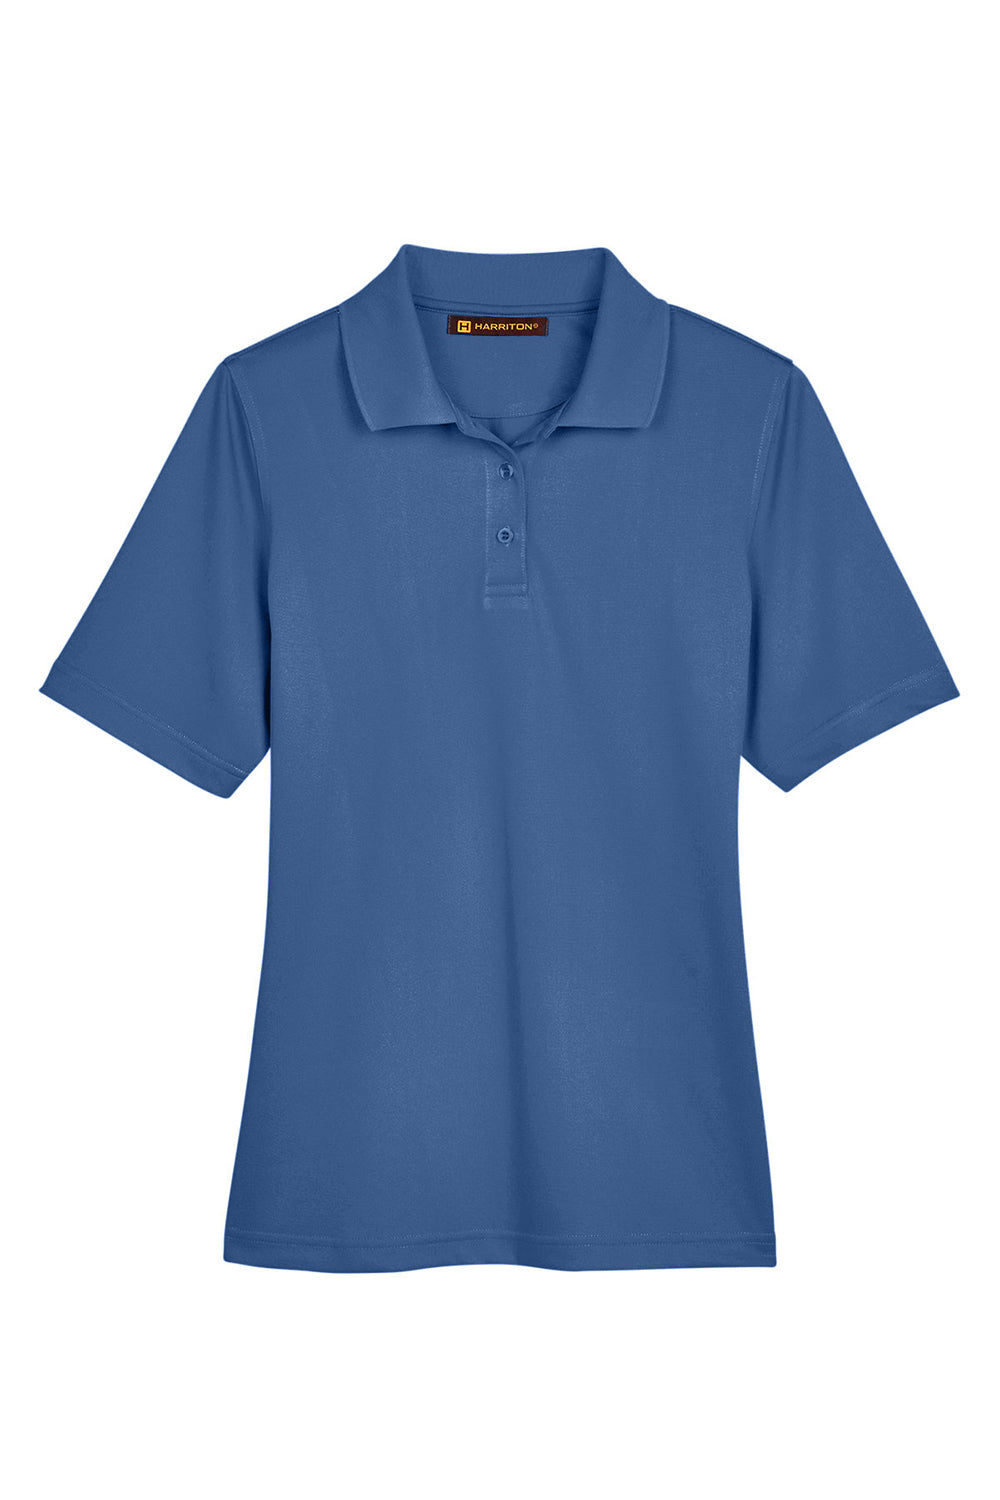 Harriton M348W Womens Advantage Performance Moisture Wicking Short Sleeve Polo Shirt Pool Blue Flat Front